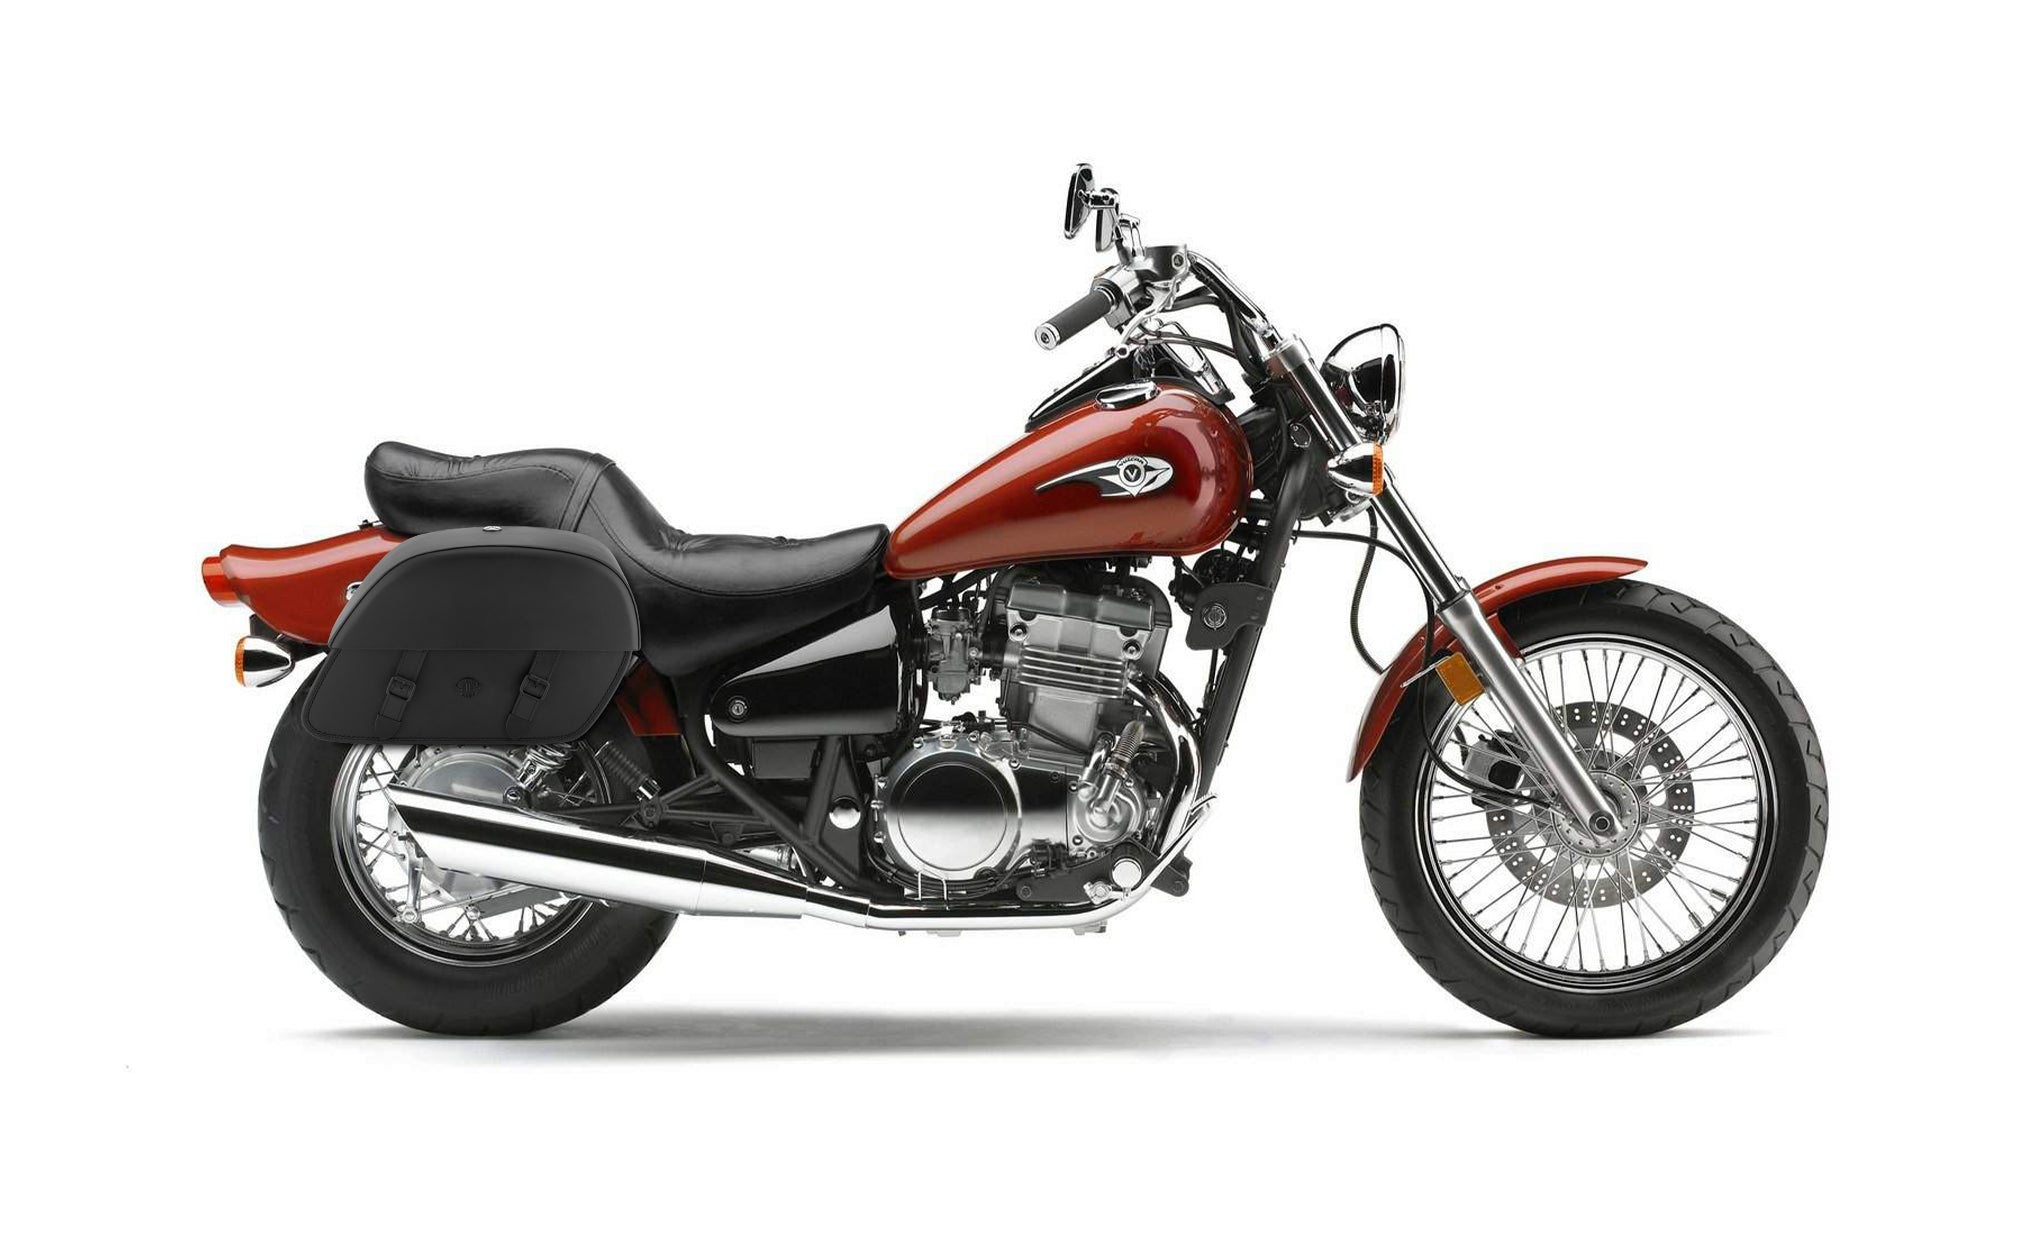 28L - Baelor Medium Vulcan 500 EN500 Motorcycle Saddlebags @expand